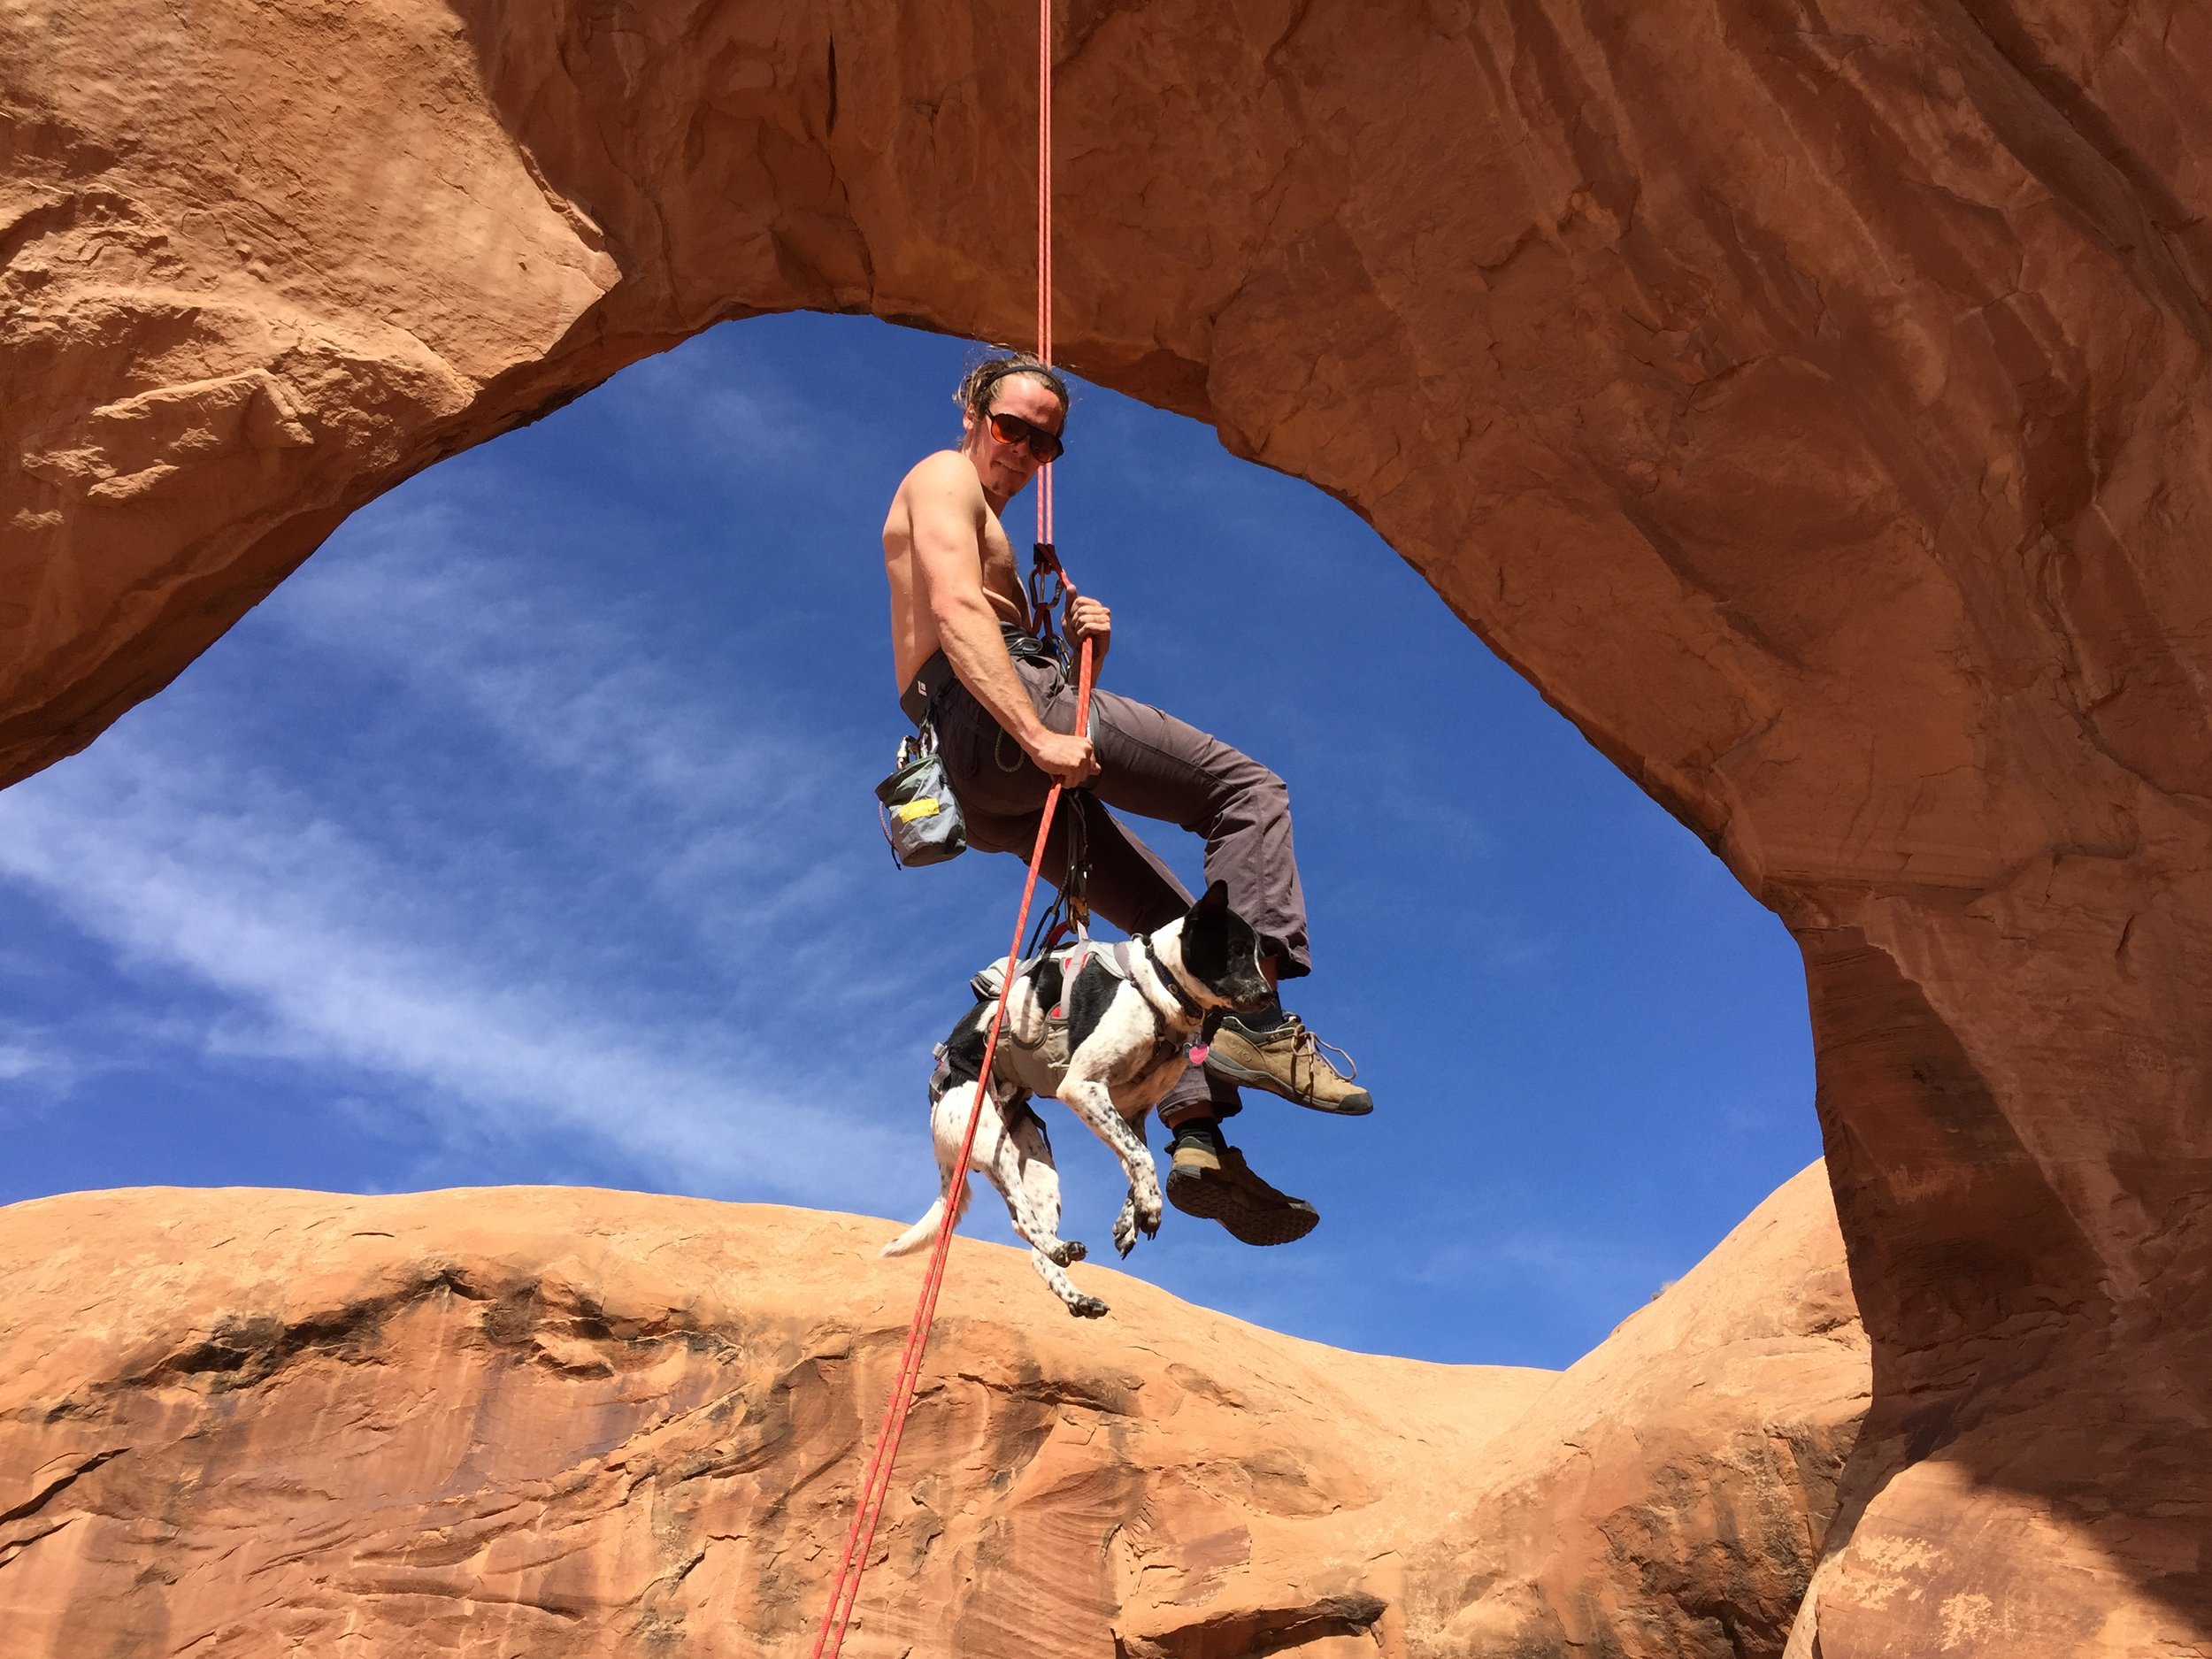 rock climbing in moab, utah // adventure lifestyle photographer // www.abbihearne.com